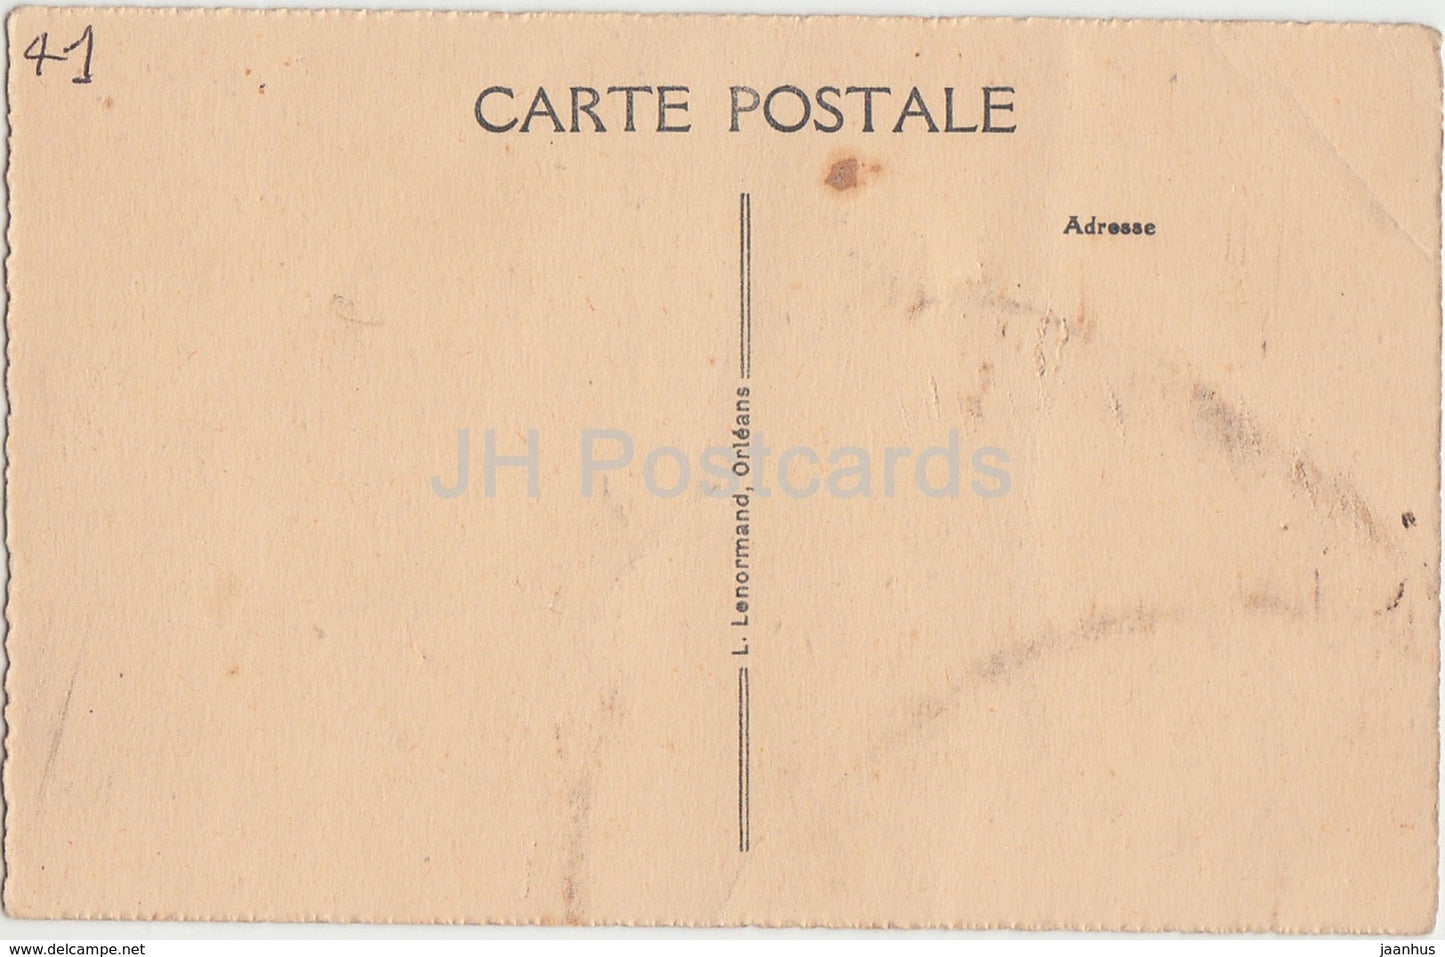 Lamotte Beuvron - Chateau de Bouchetin - castle - old postcard - France - unused